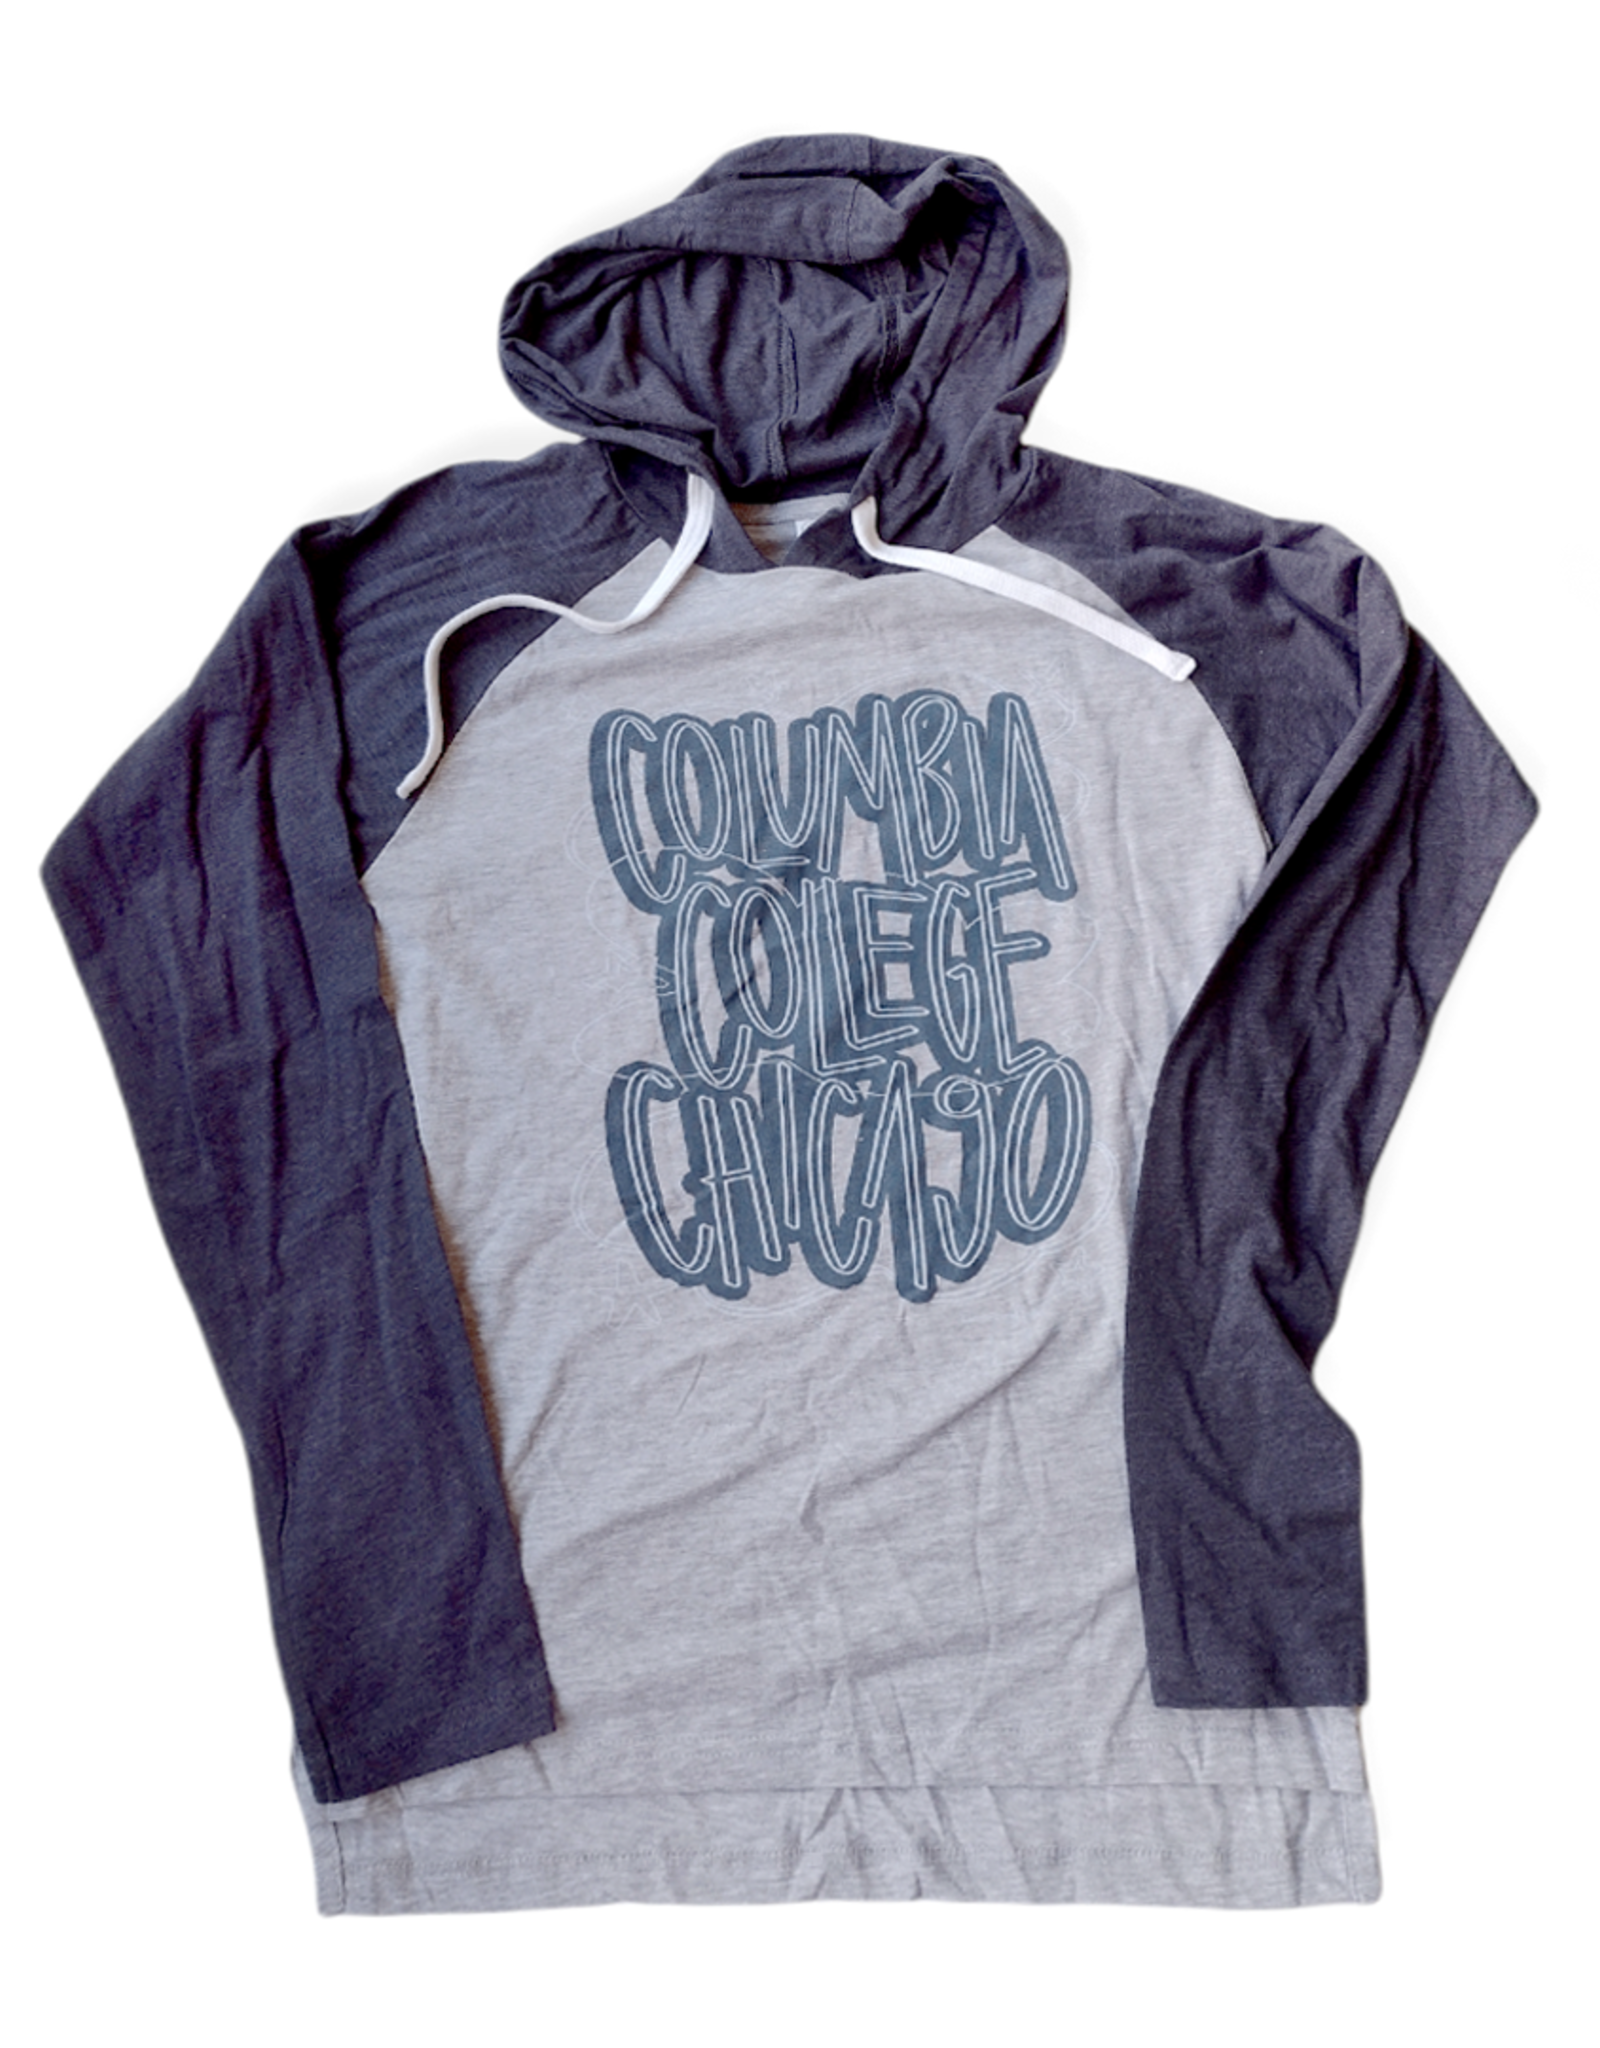 Buy Columbia, By Columbia New: Hooded Raglan Columbia Tshirt